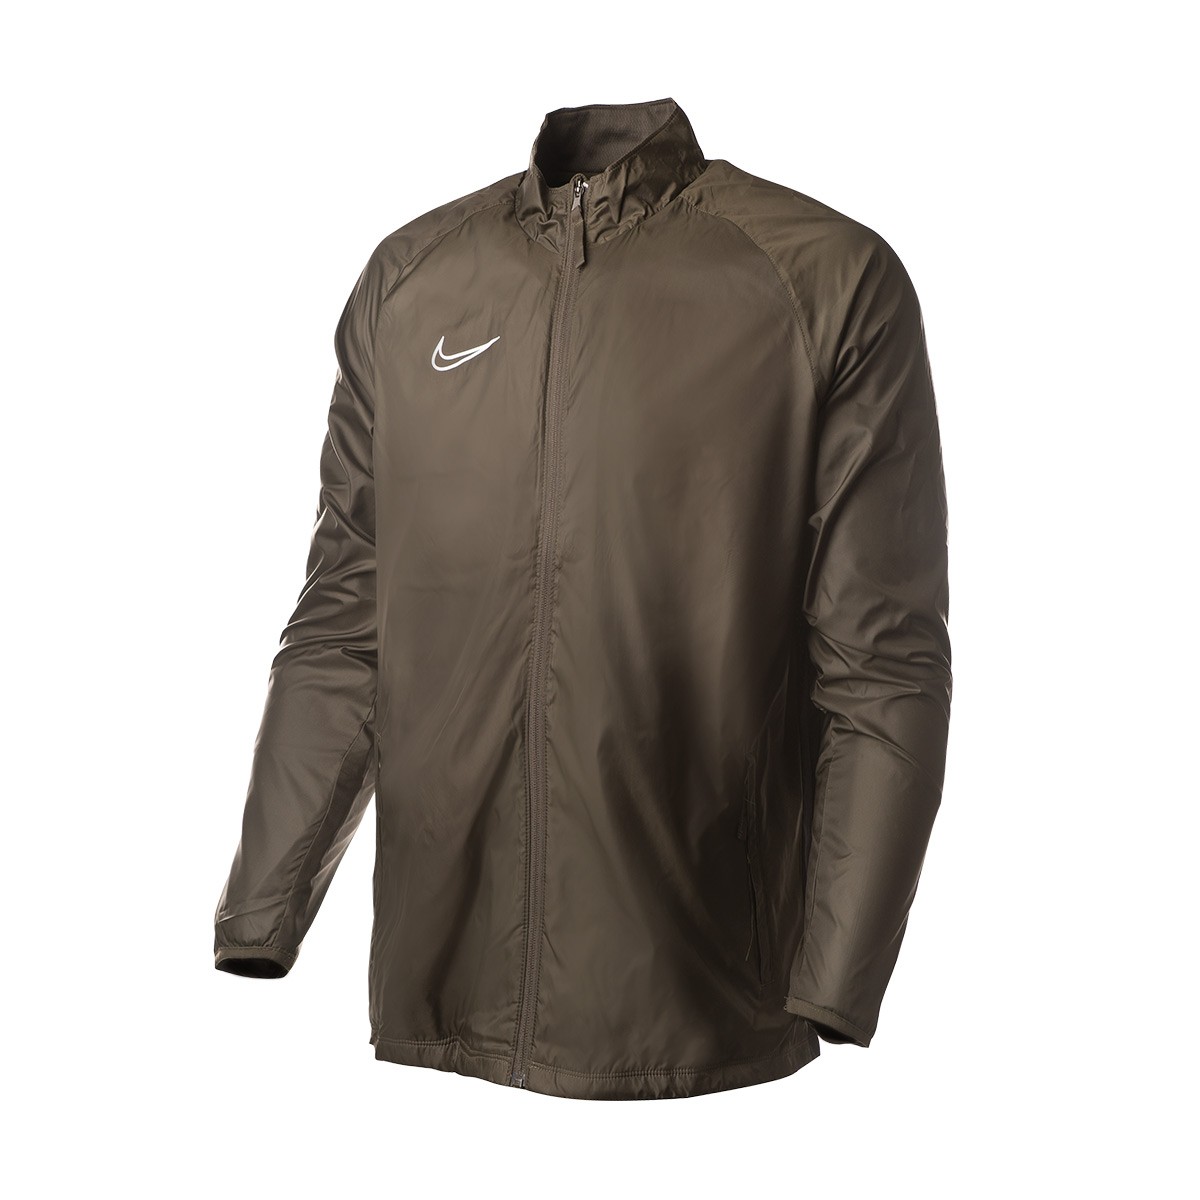 Jacket Nike Repel Academy Cargo khaki 